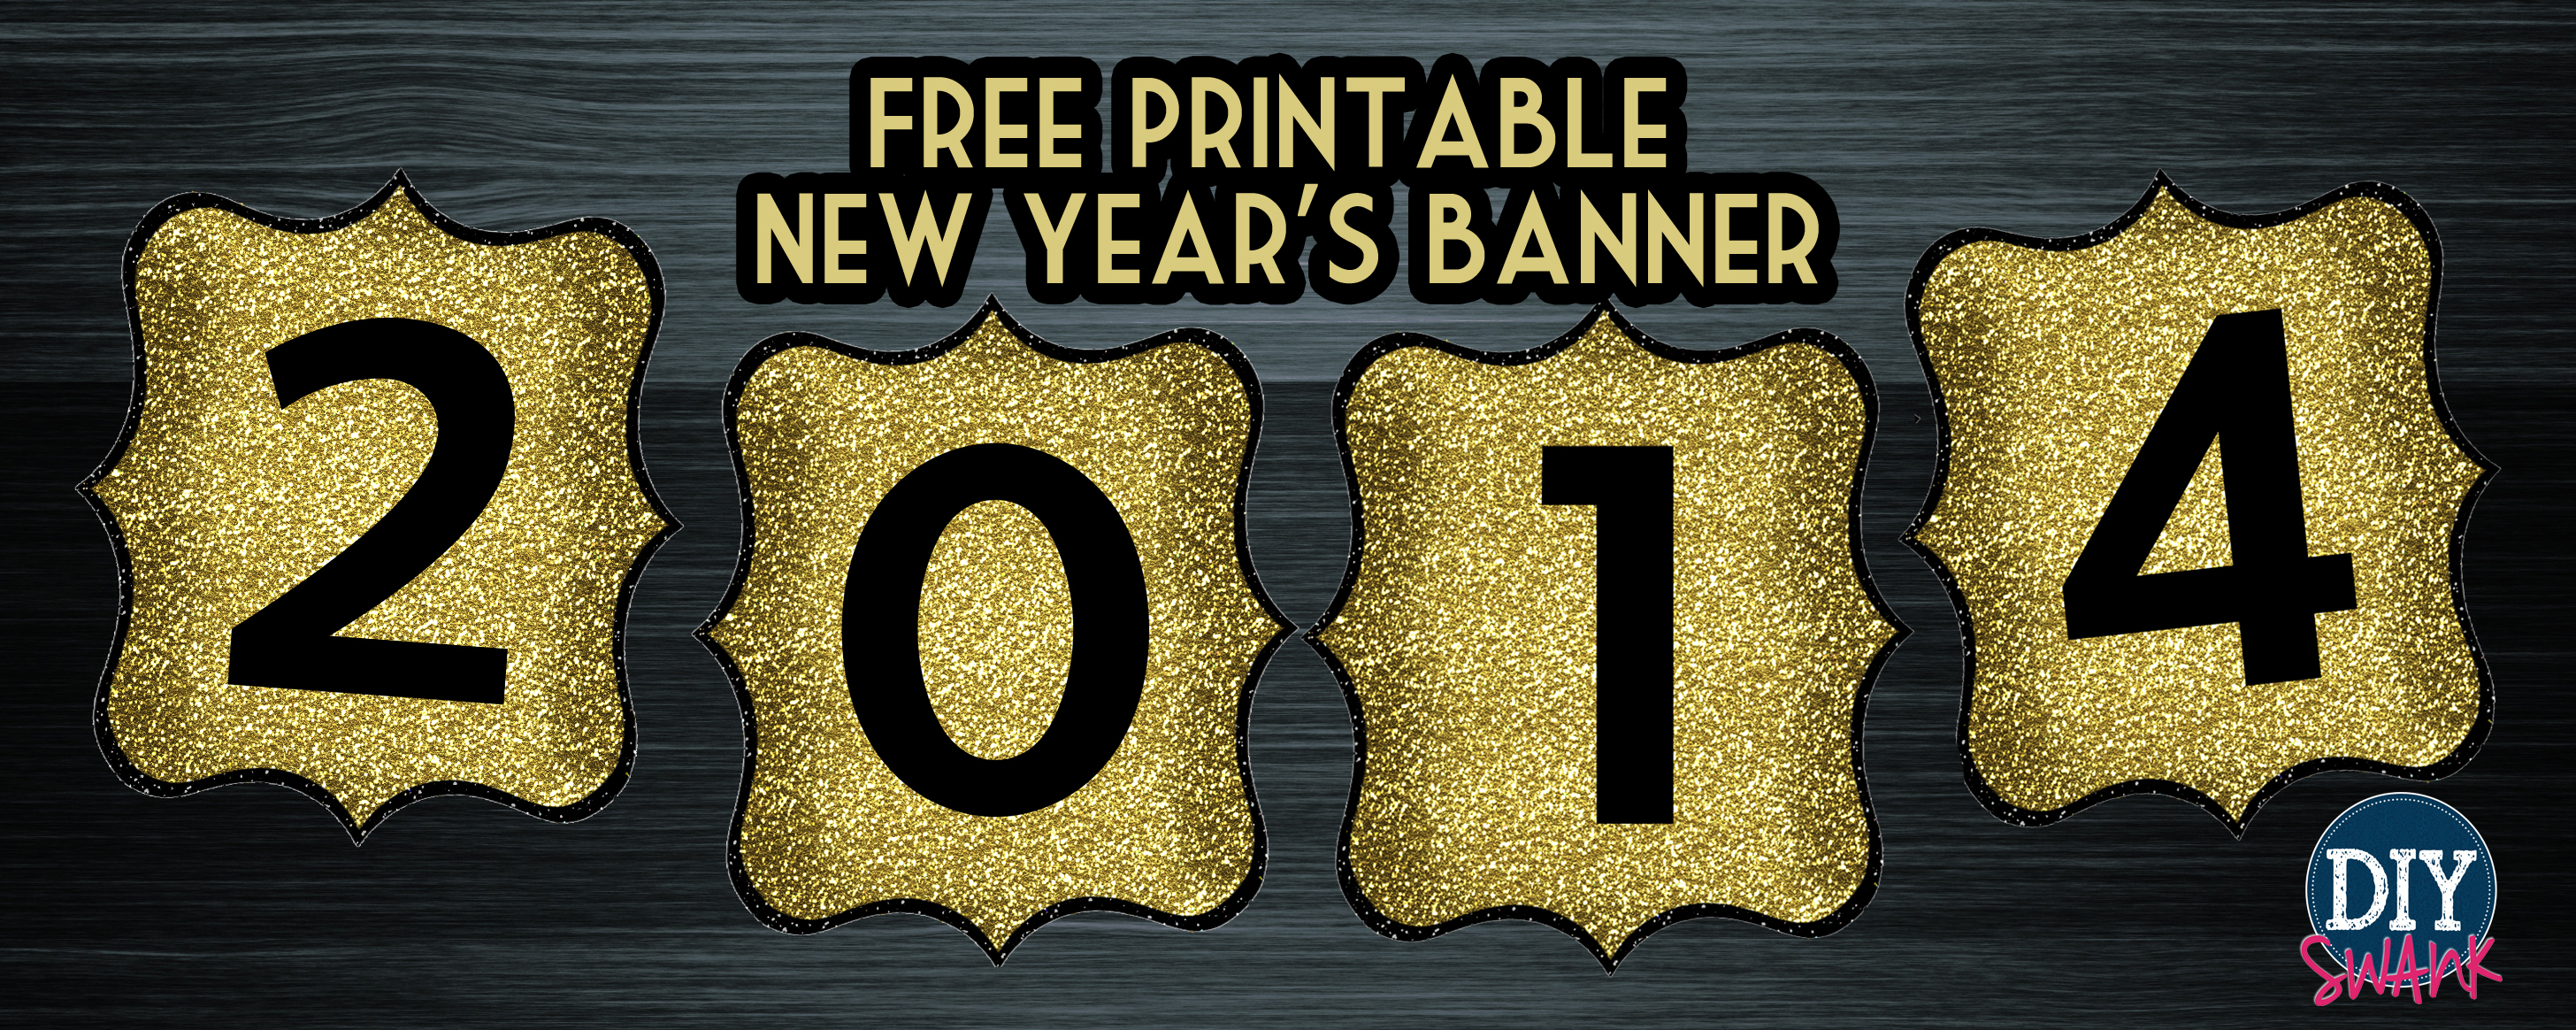 Happy New Year Banner Free Printable DIY SWANK